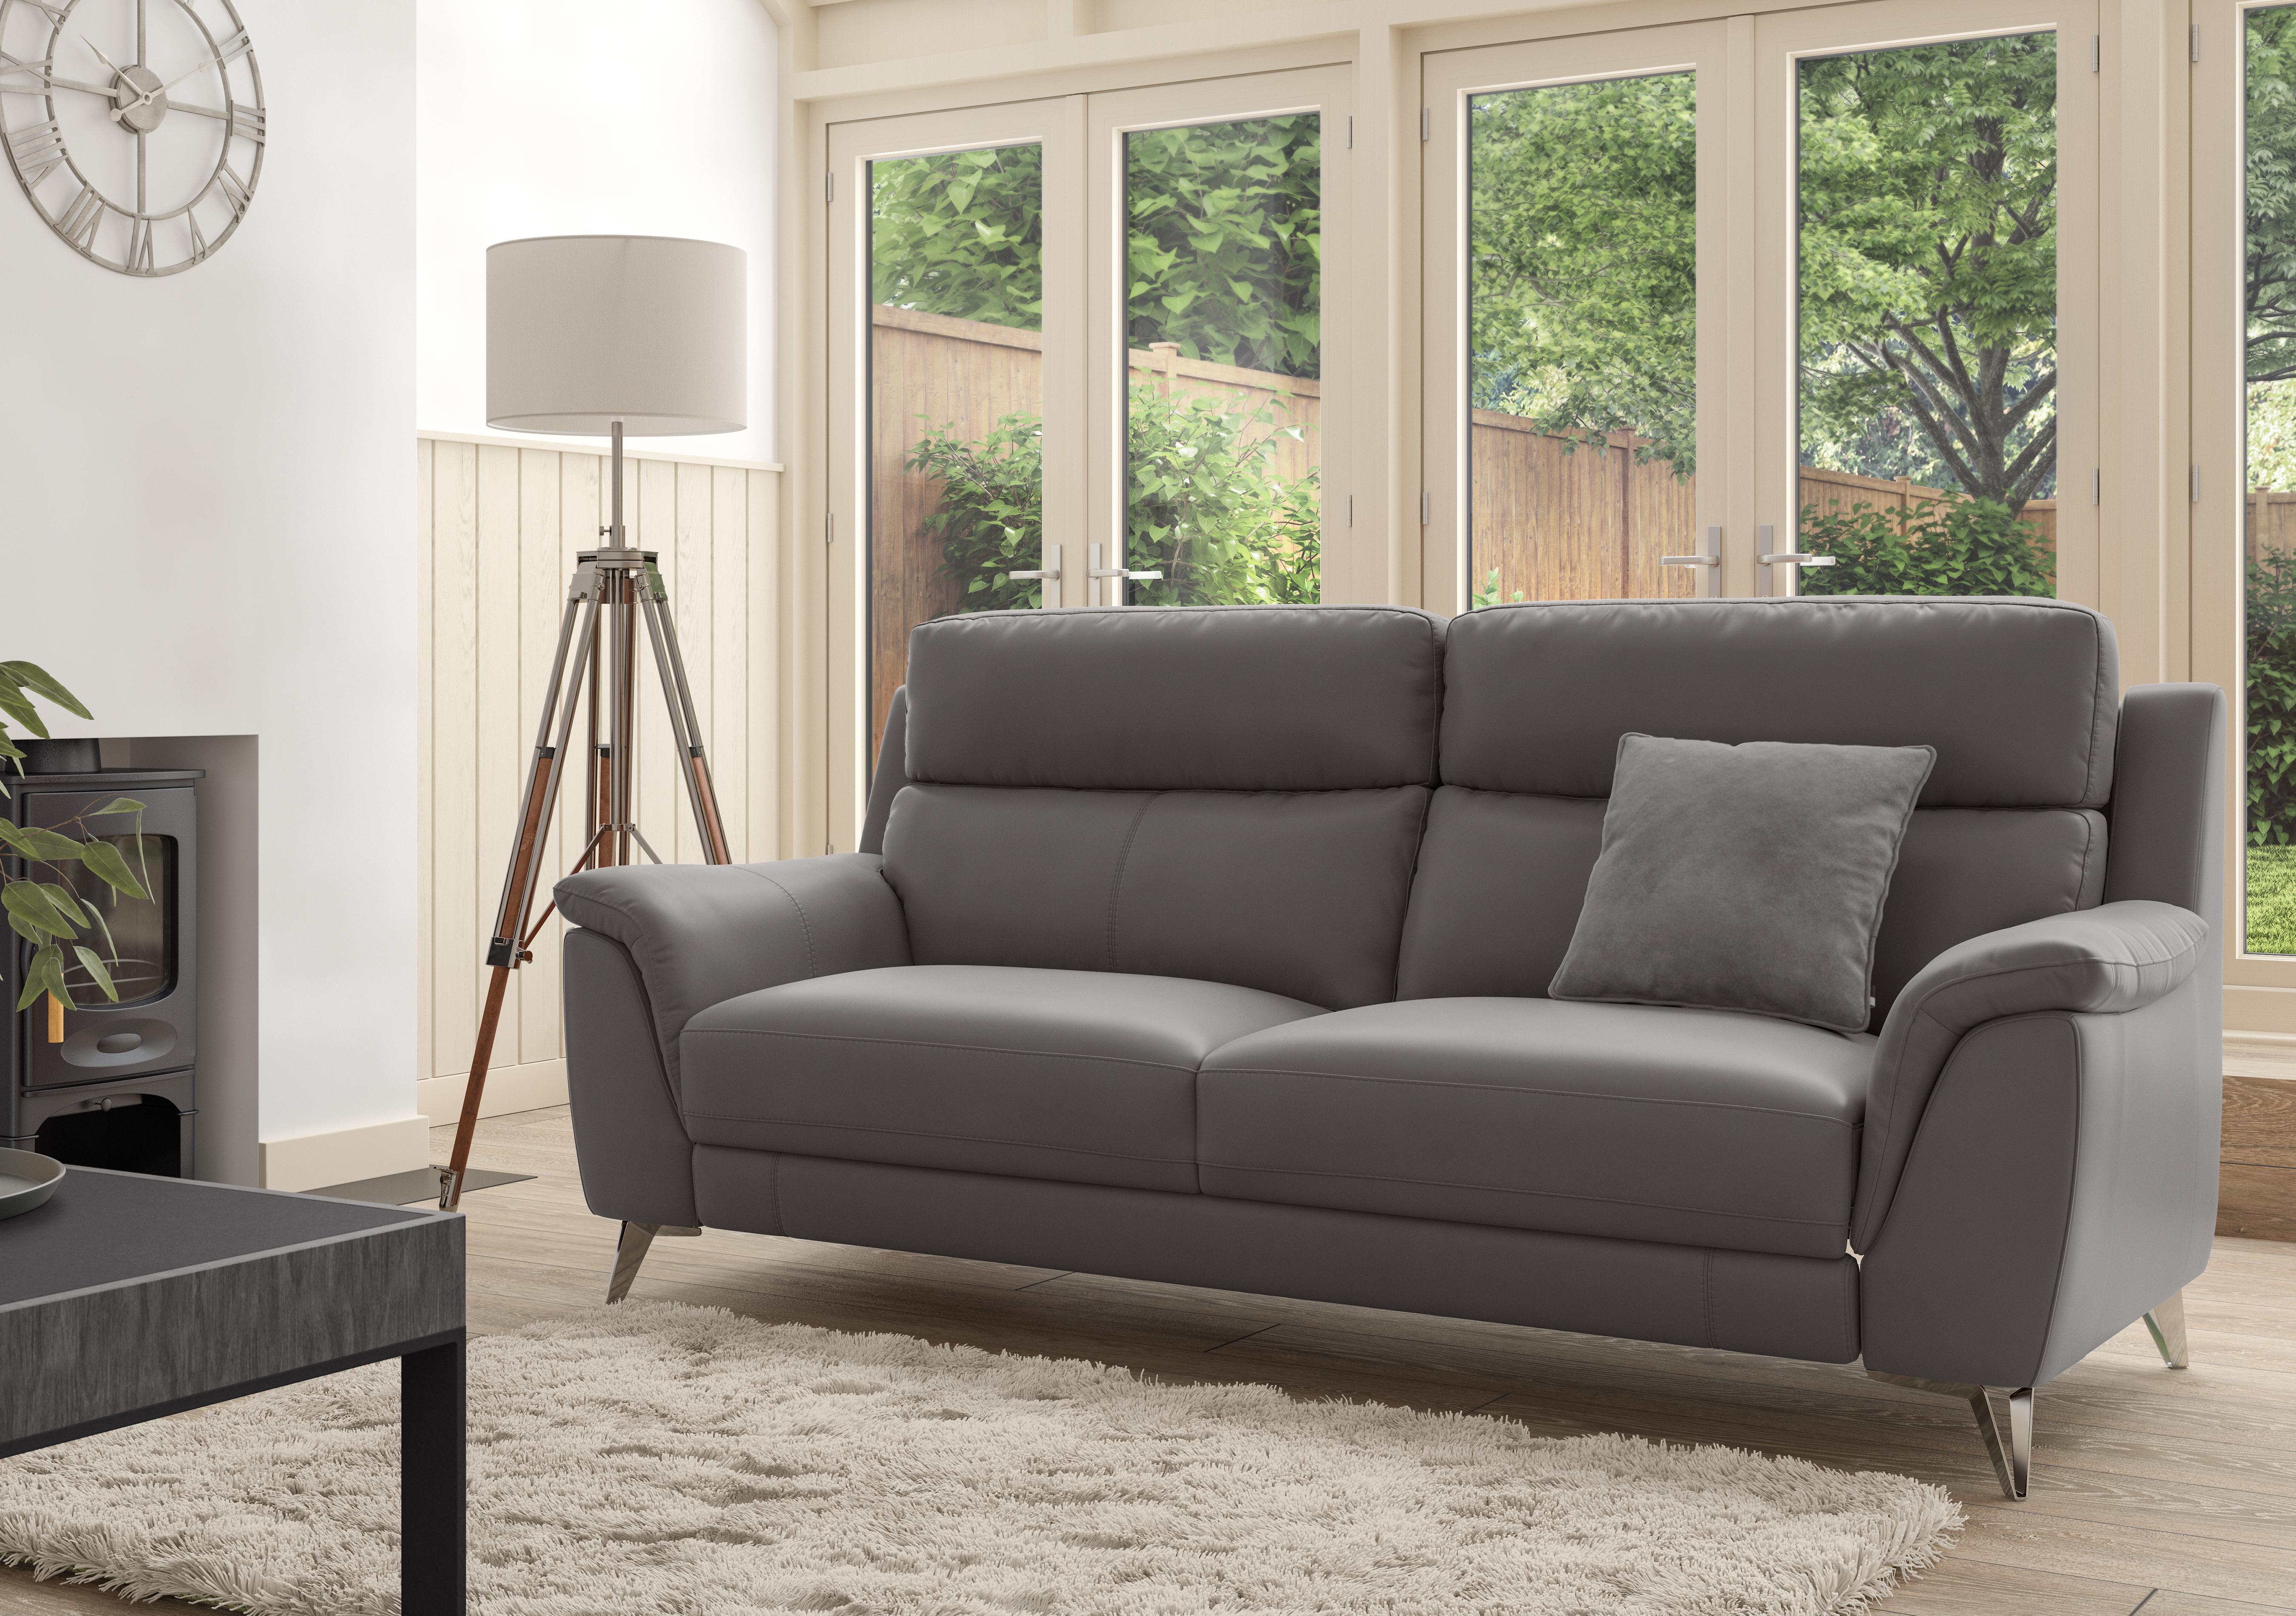 Contempo 3 Seater Leather Sofa in  on Furniture Village